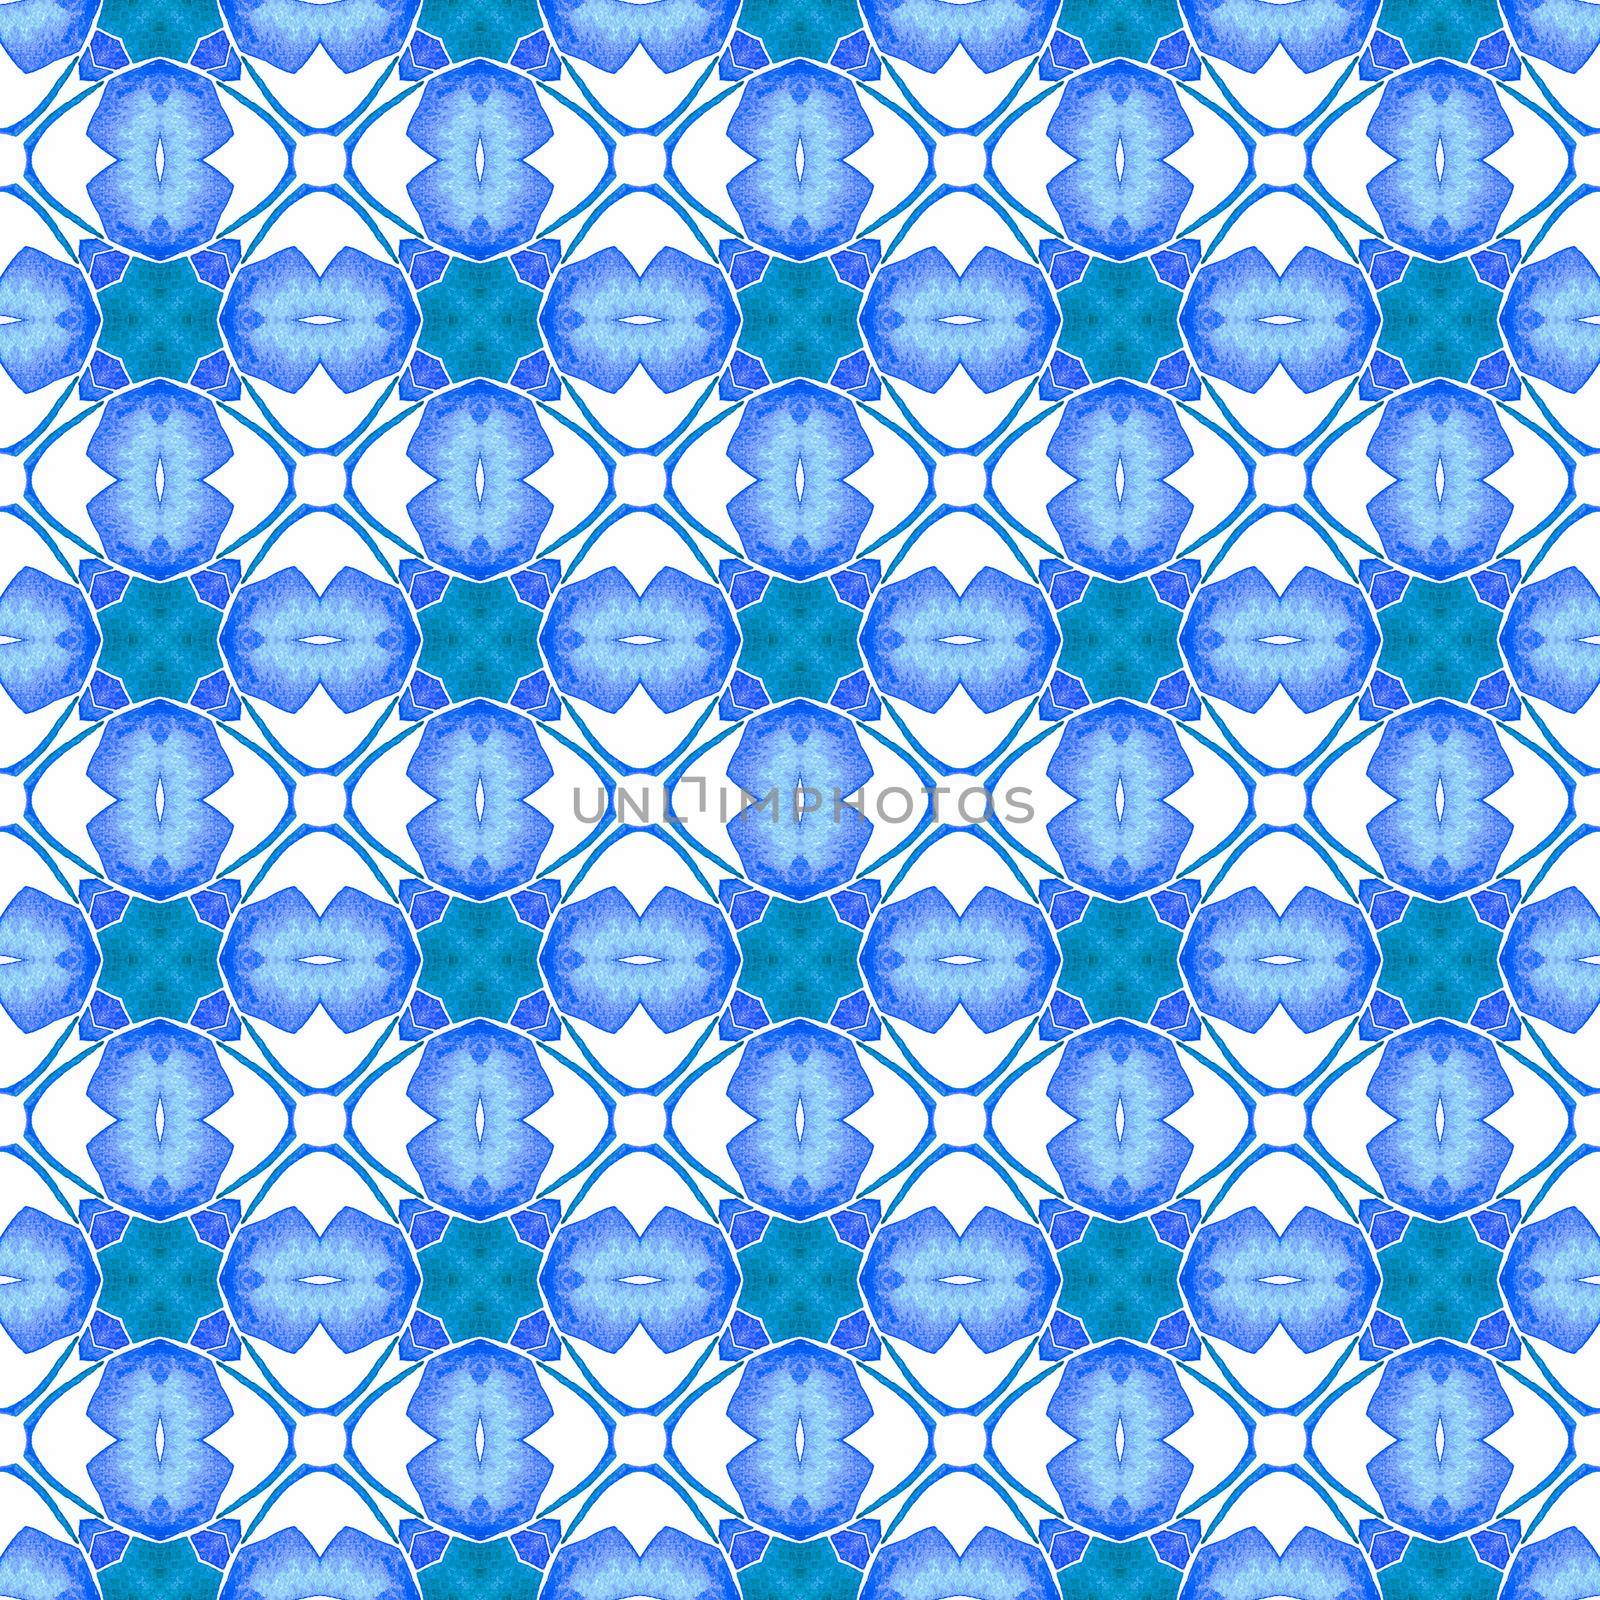 Chevron watercolor pattern. Blue dazzling boho chic summer design. Green geometric chevron watercolor border. Textile ready extraordinary print, swimwear fabric, wallpaper, wrapping.